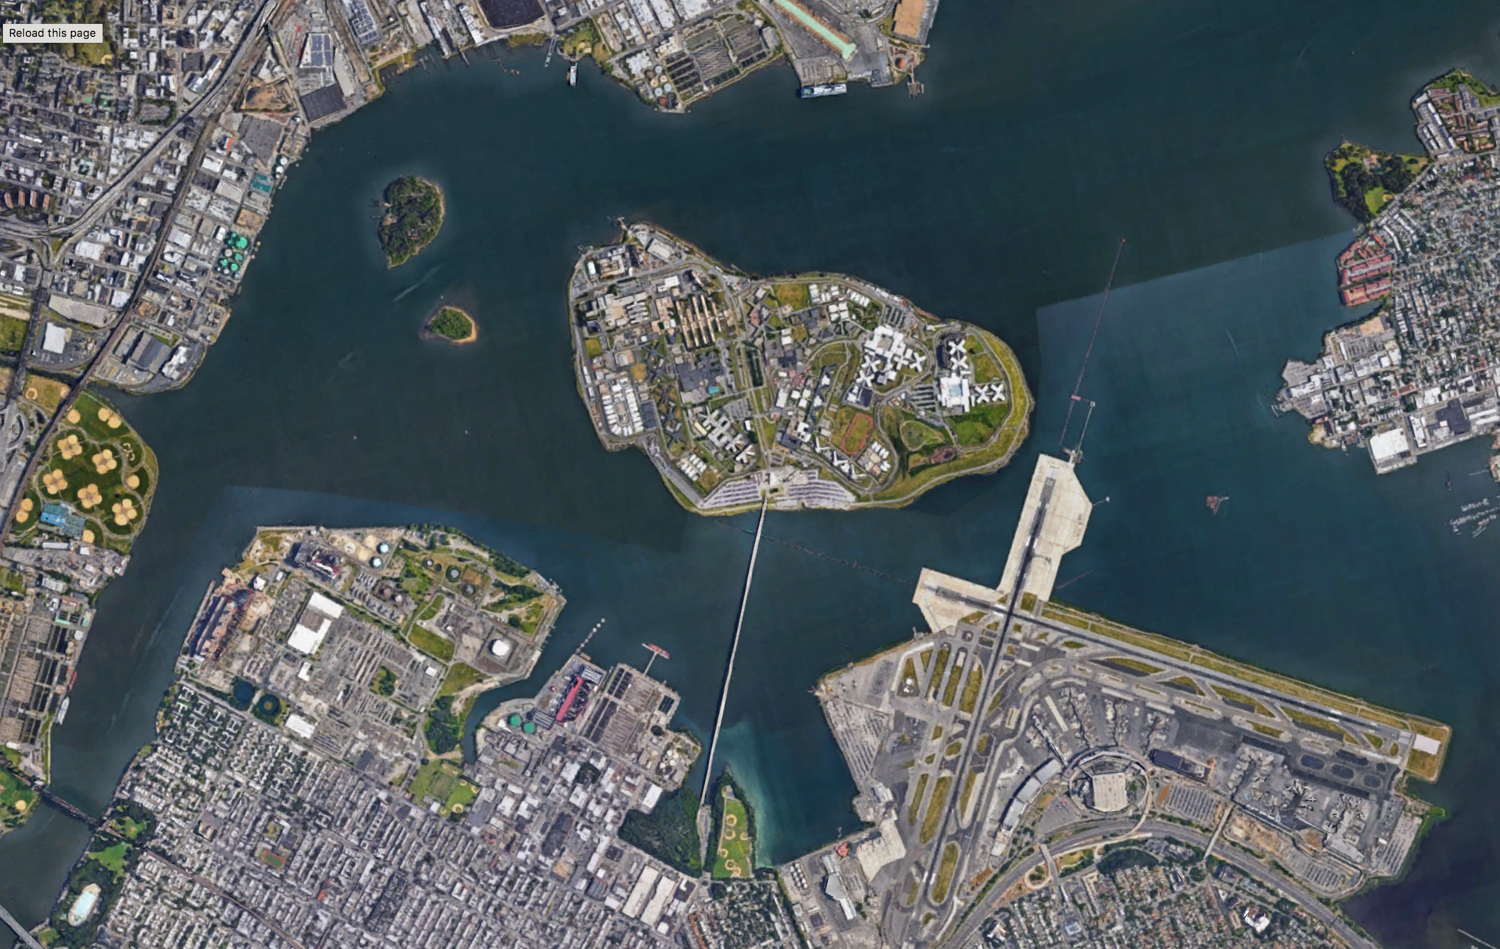 Birdseye view of Rikers Island, via Google Maps